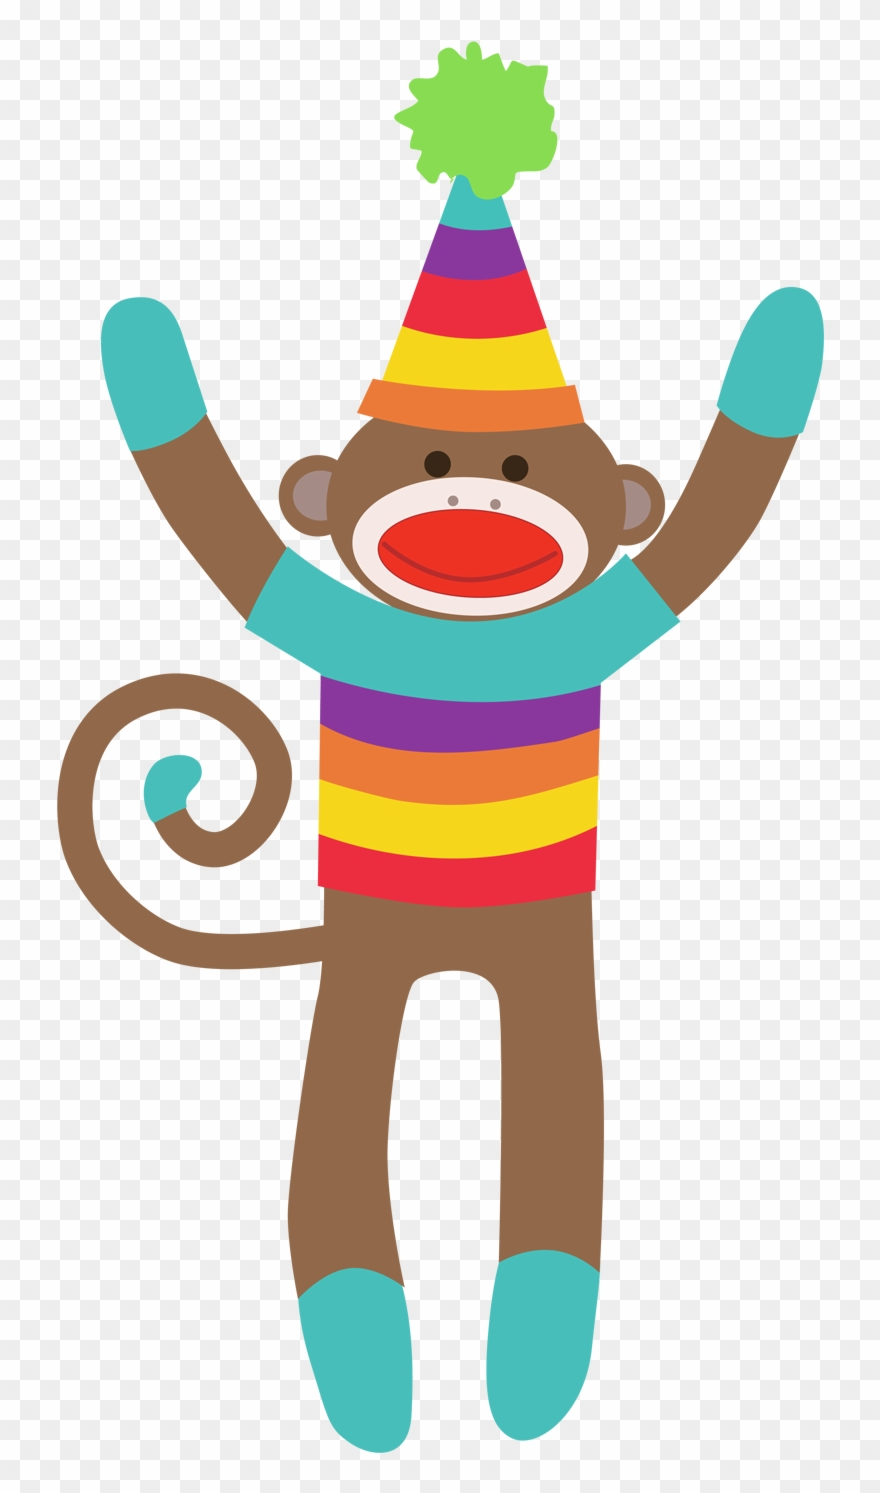 Sock Monkey Clipart Free Download Clip Art On - Colorful Sock Monkey - Free Printable Sock Monkey Clip Art